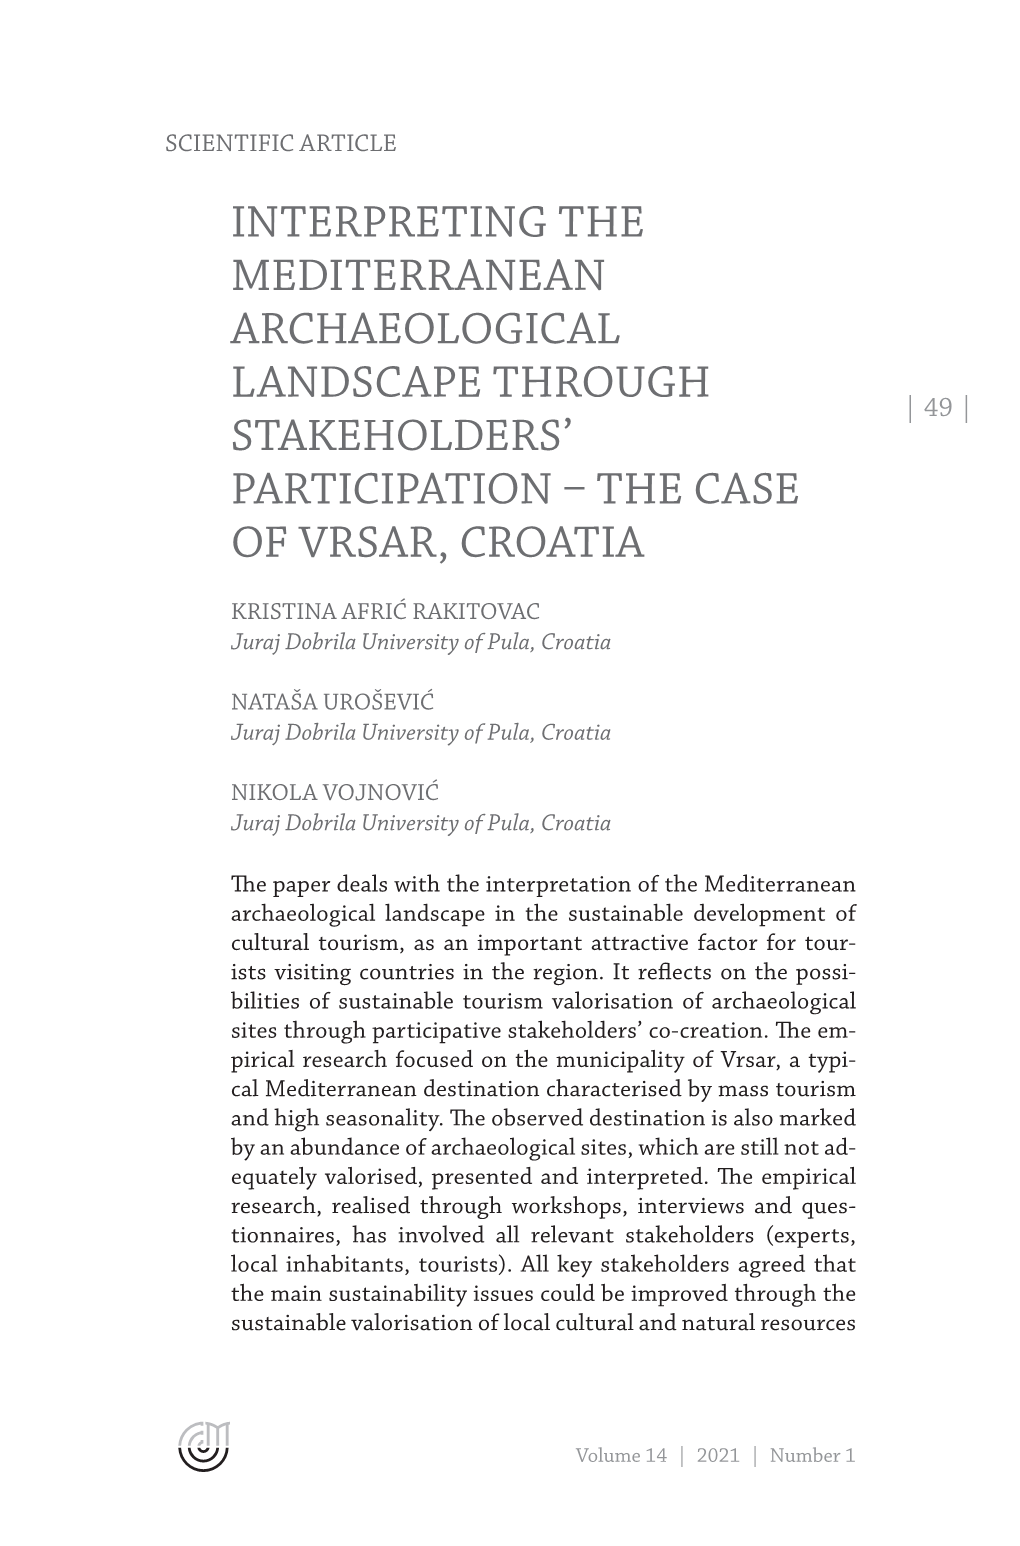 Interpreting the Mediterranean Archaeological